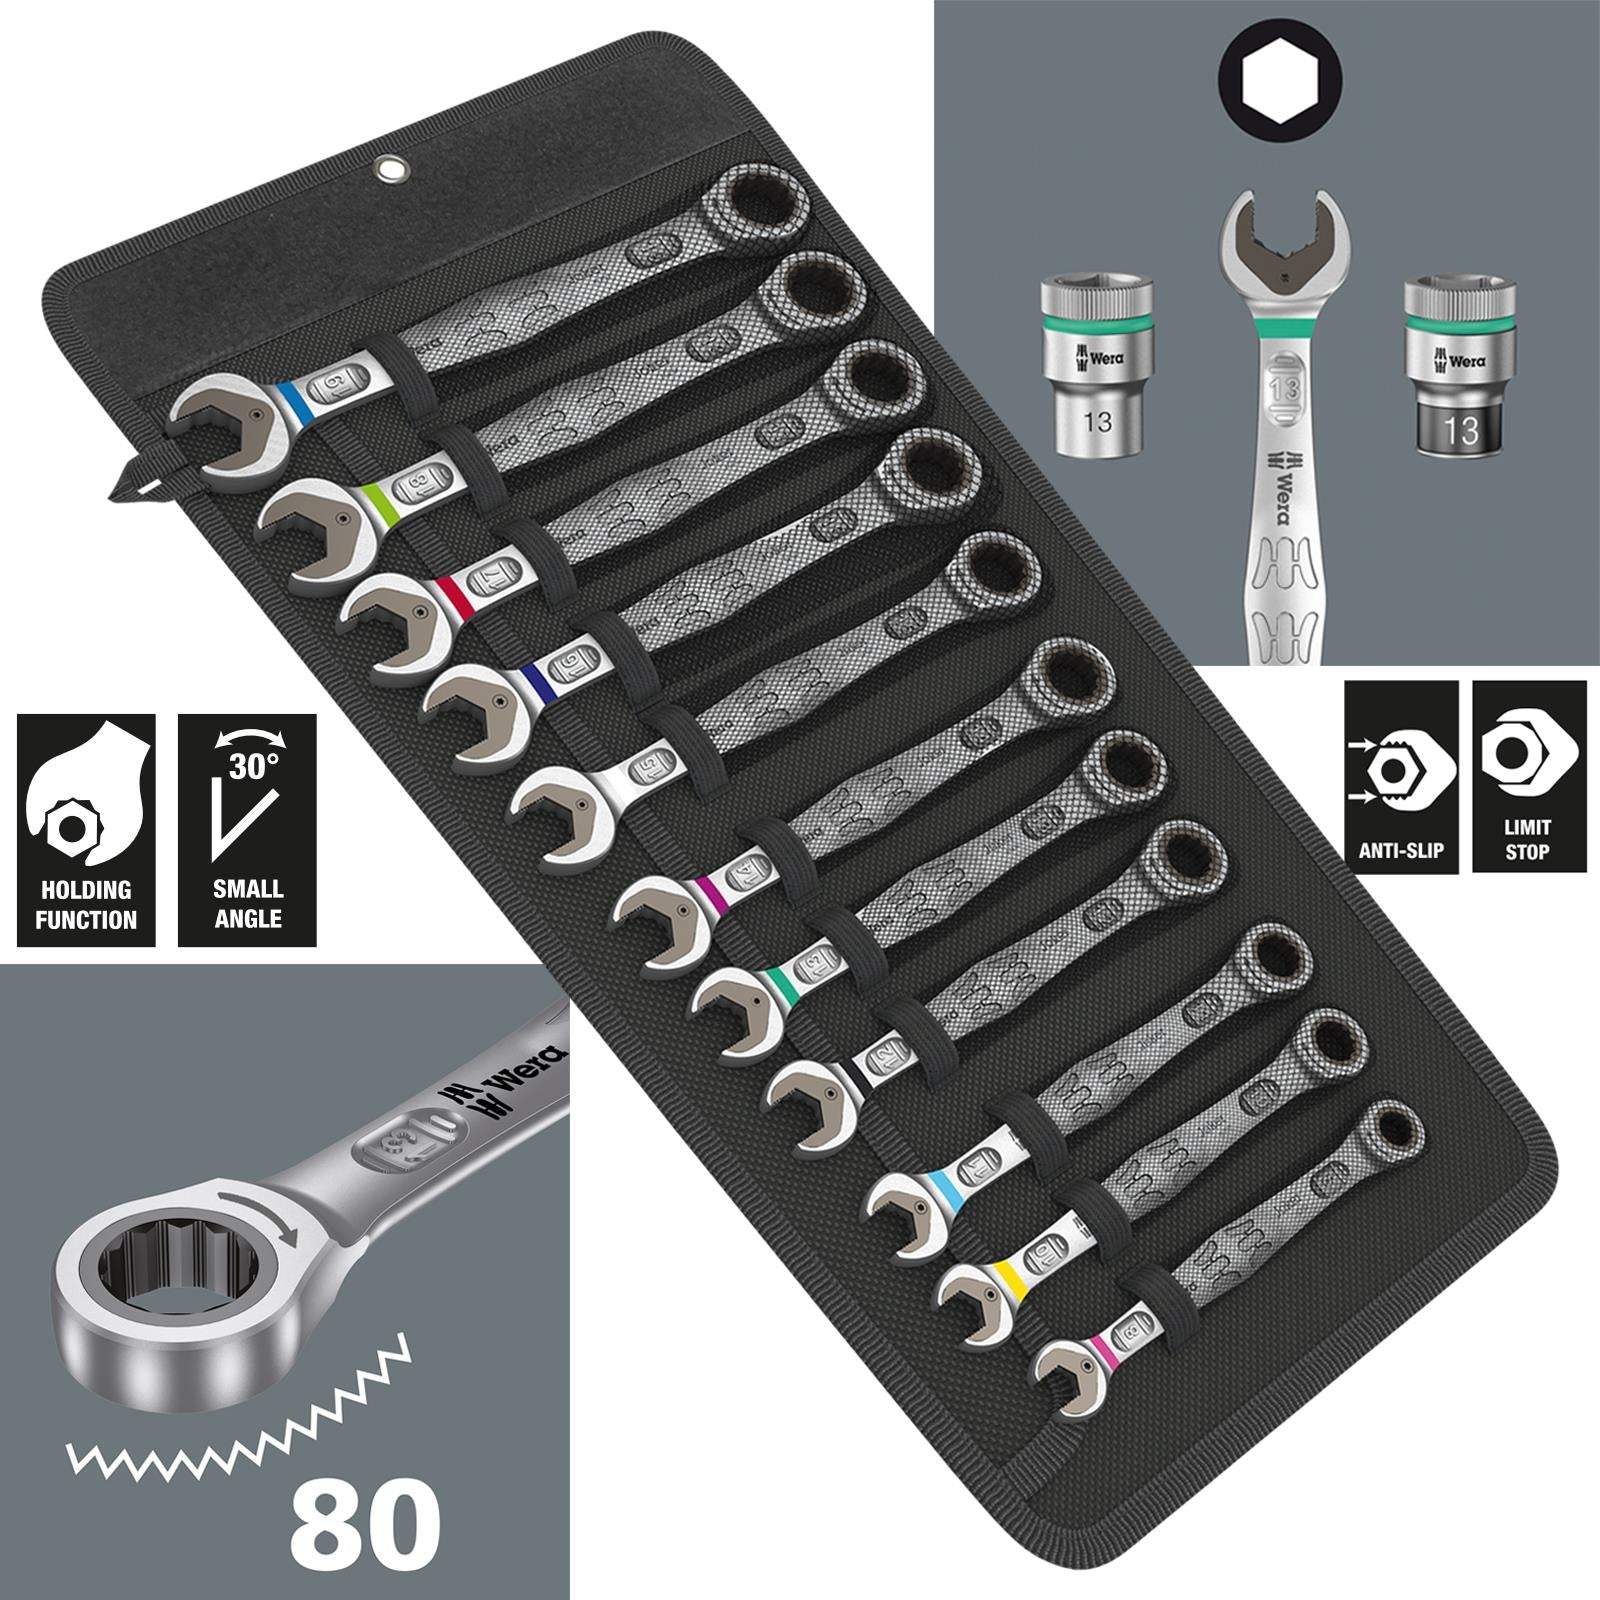 Wera 6003 Joker Combination Wrench - 8mm – 365 Cycles